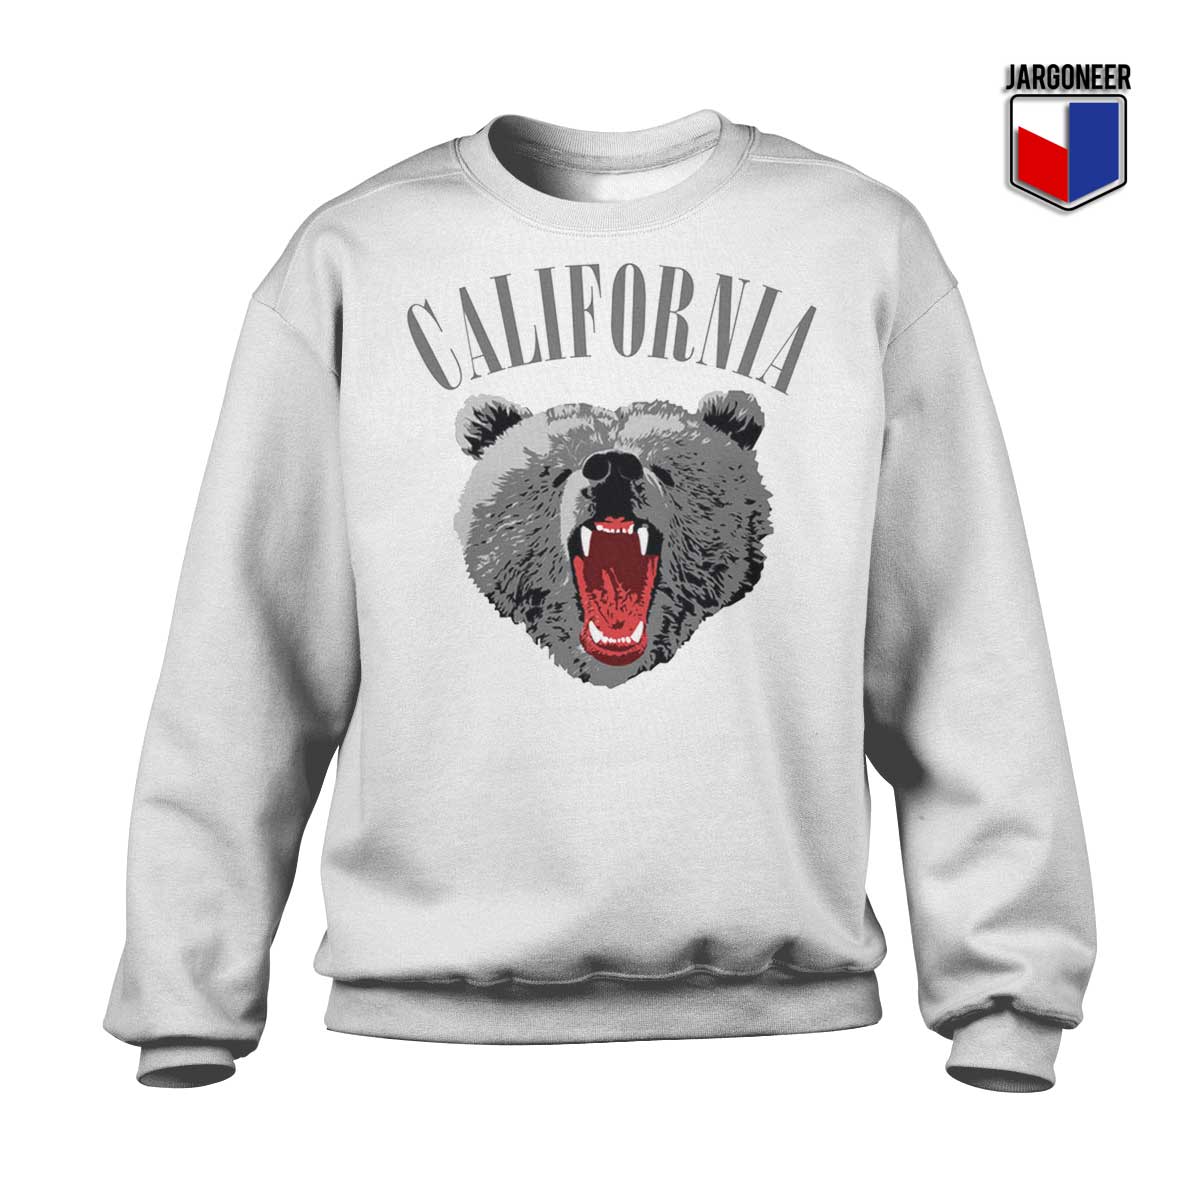 California Bear Sweatshirt - Shop Unique Graphic Cool Shirt Designs